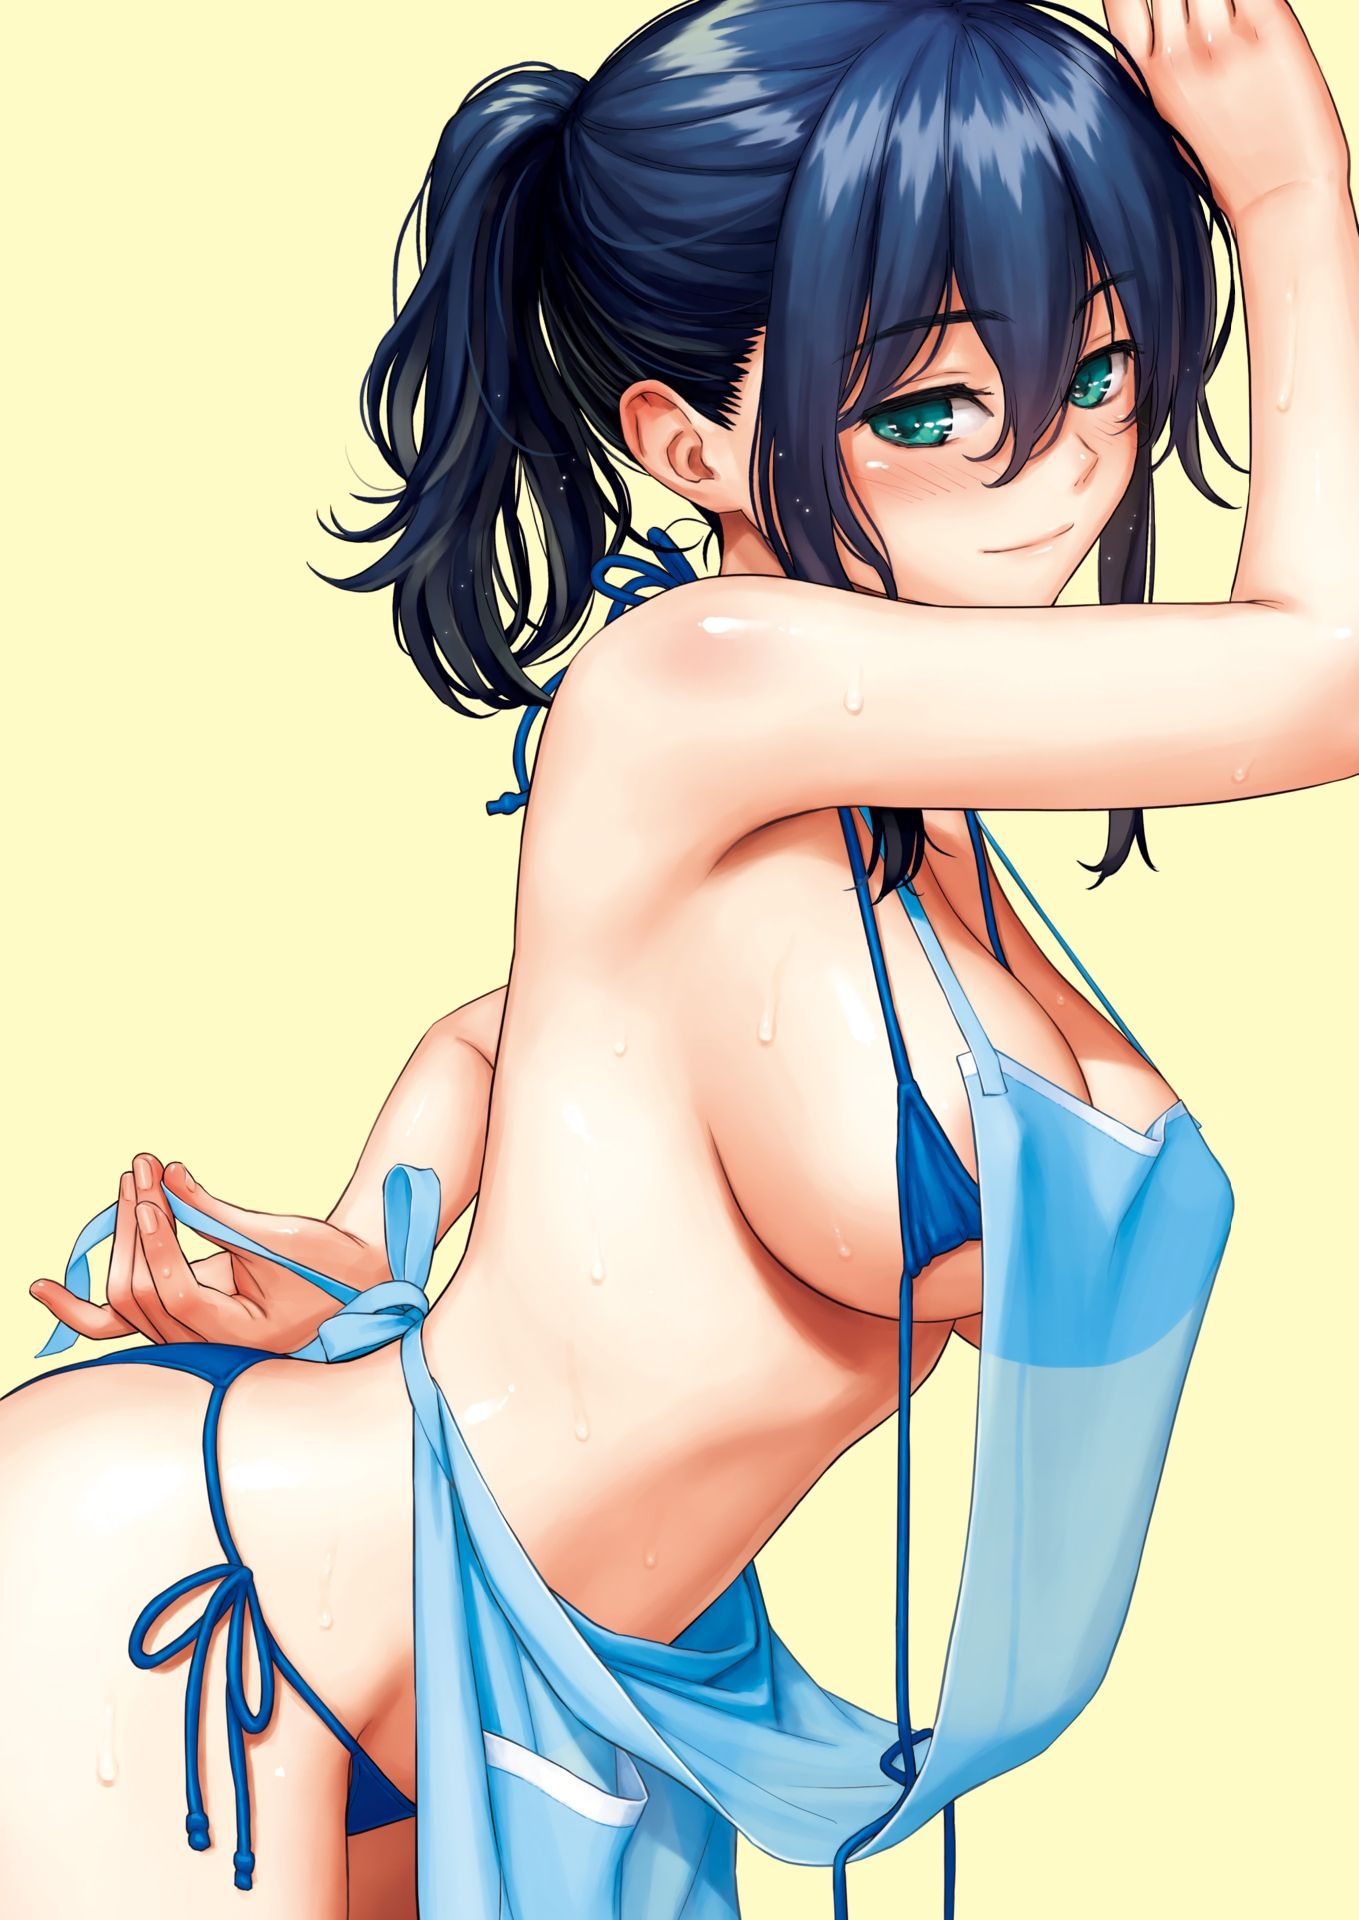 [Secondary, ZIP] beautiful girl image of micro bikini that porori when a little 10